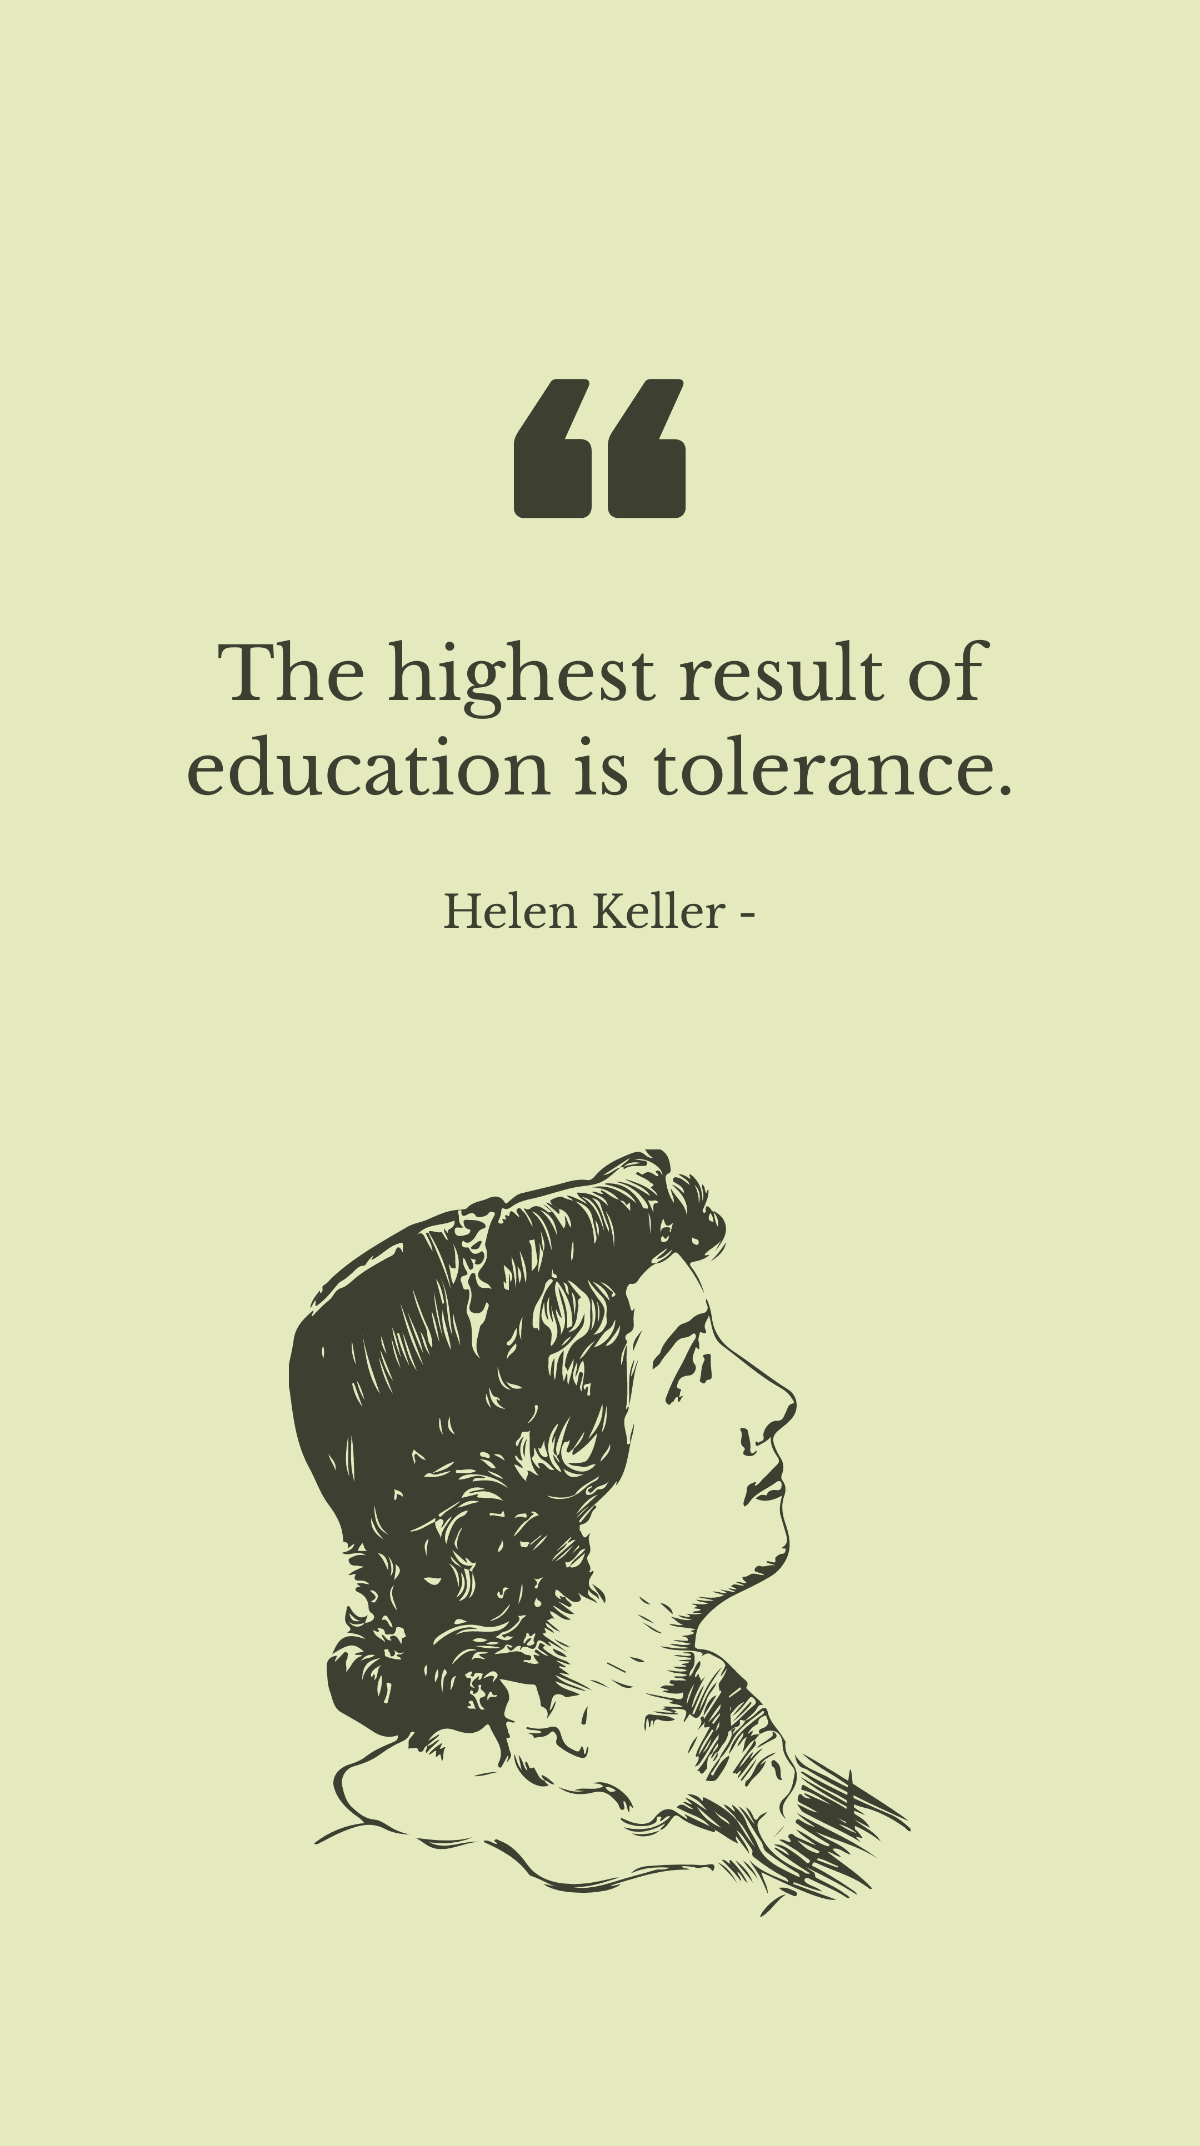 Helen Keller - The highest result of education is tolerance. Template